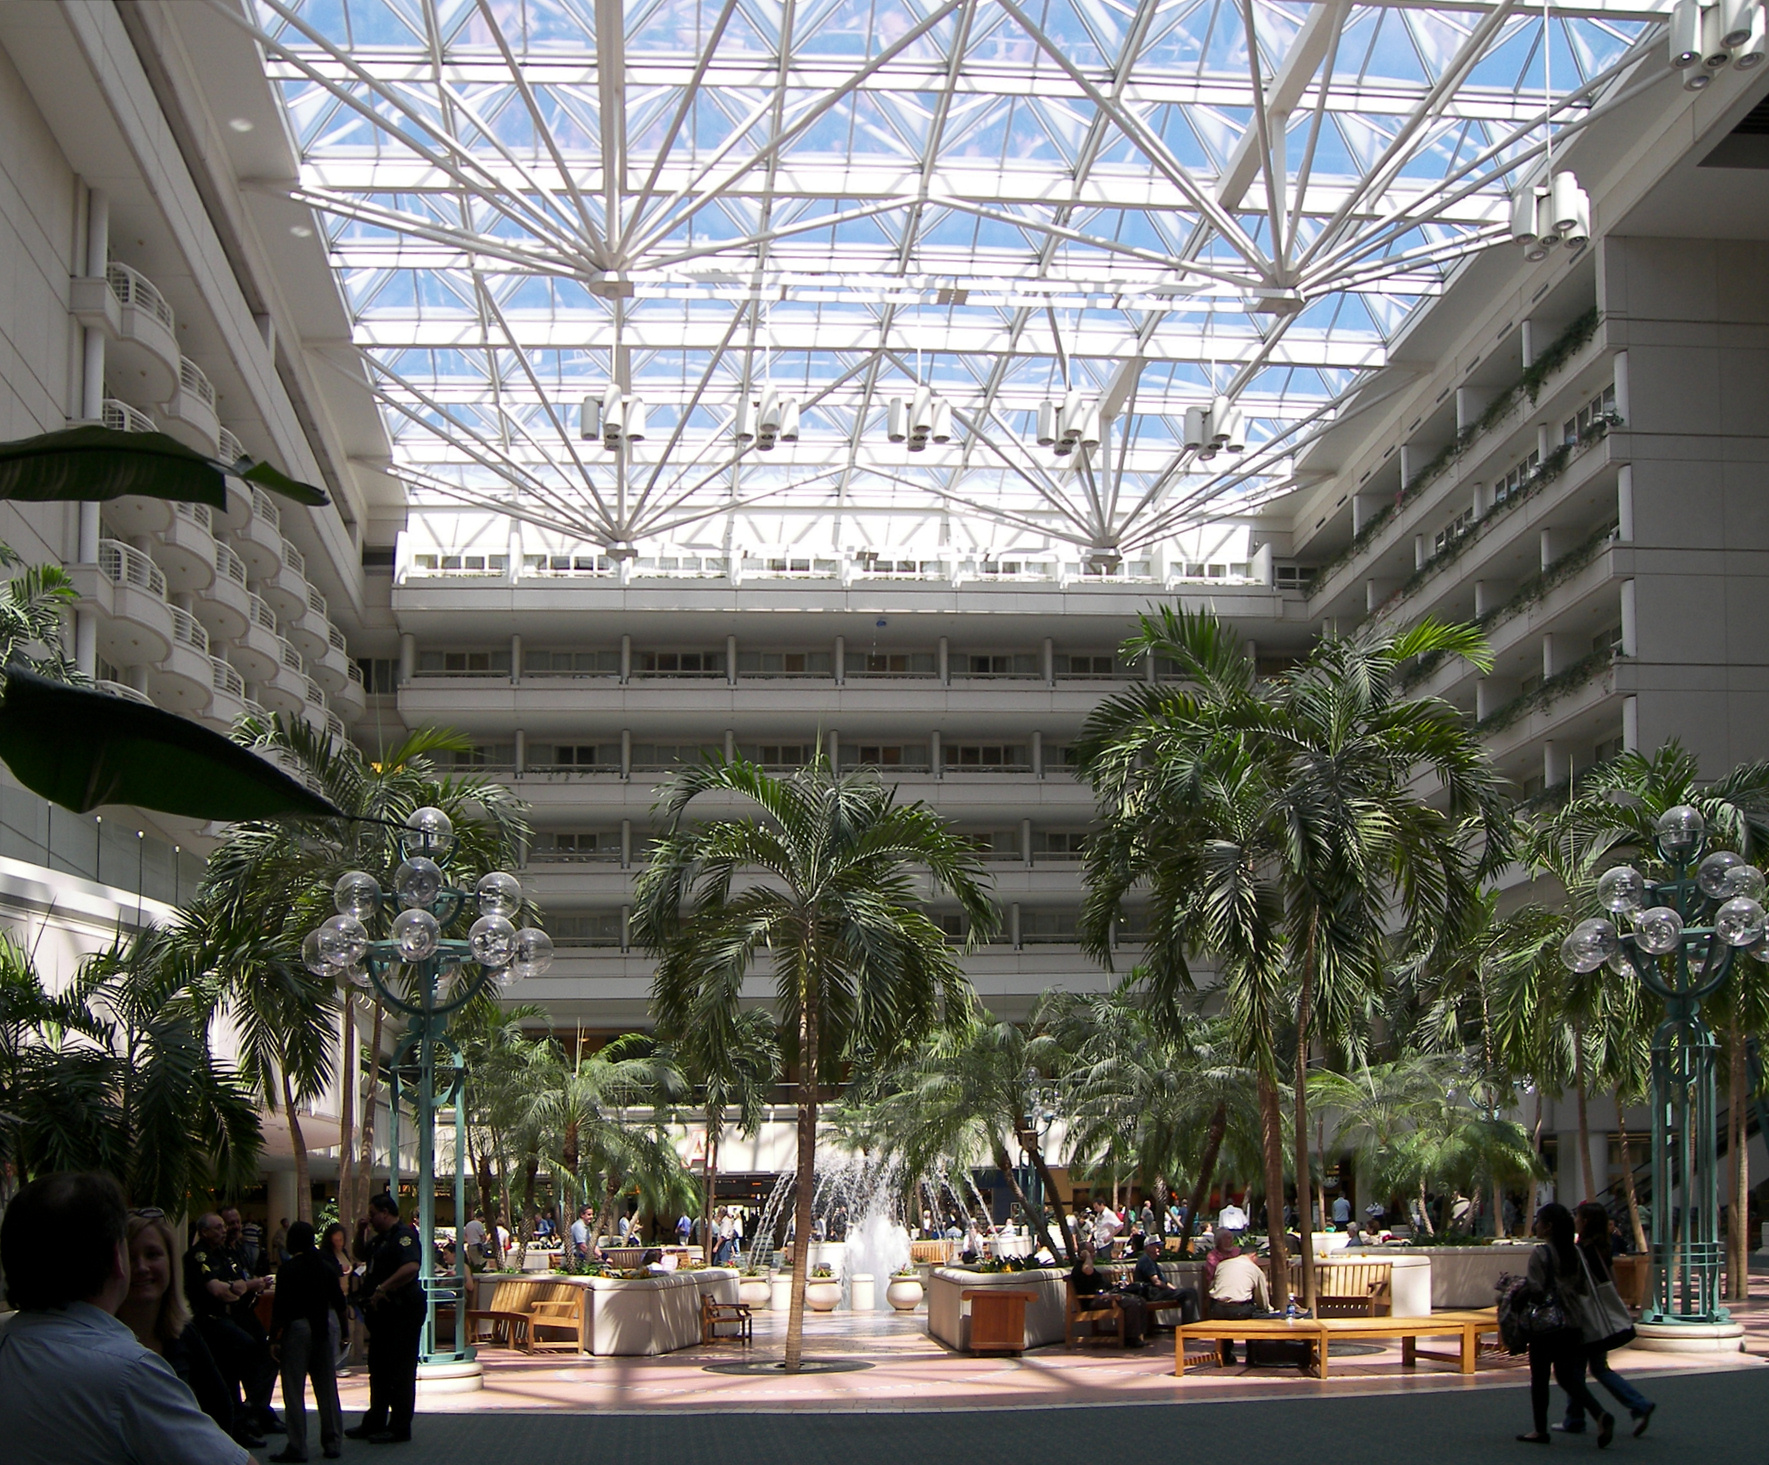 Orlando_international_airport_atrium